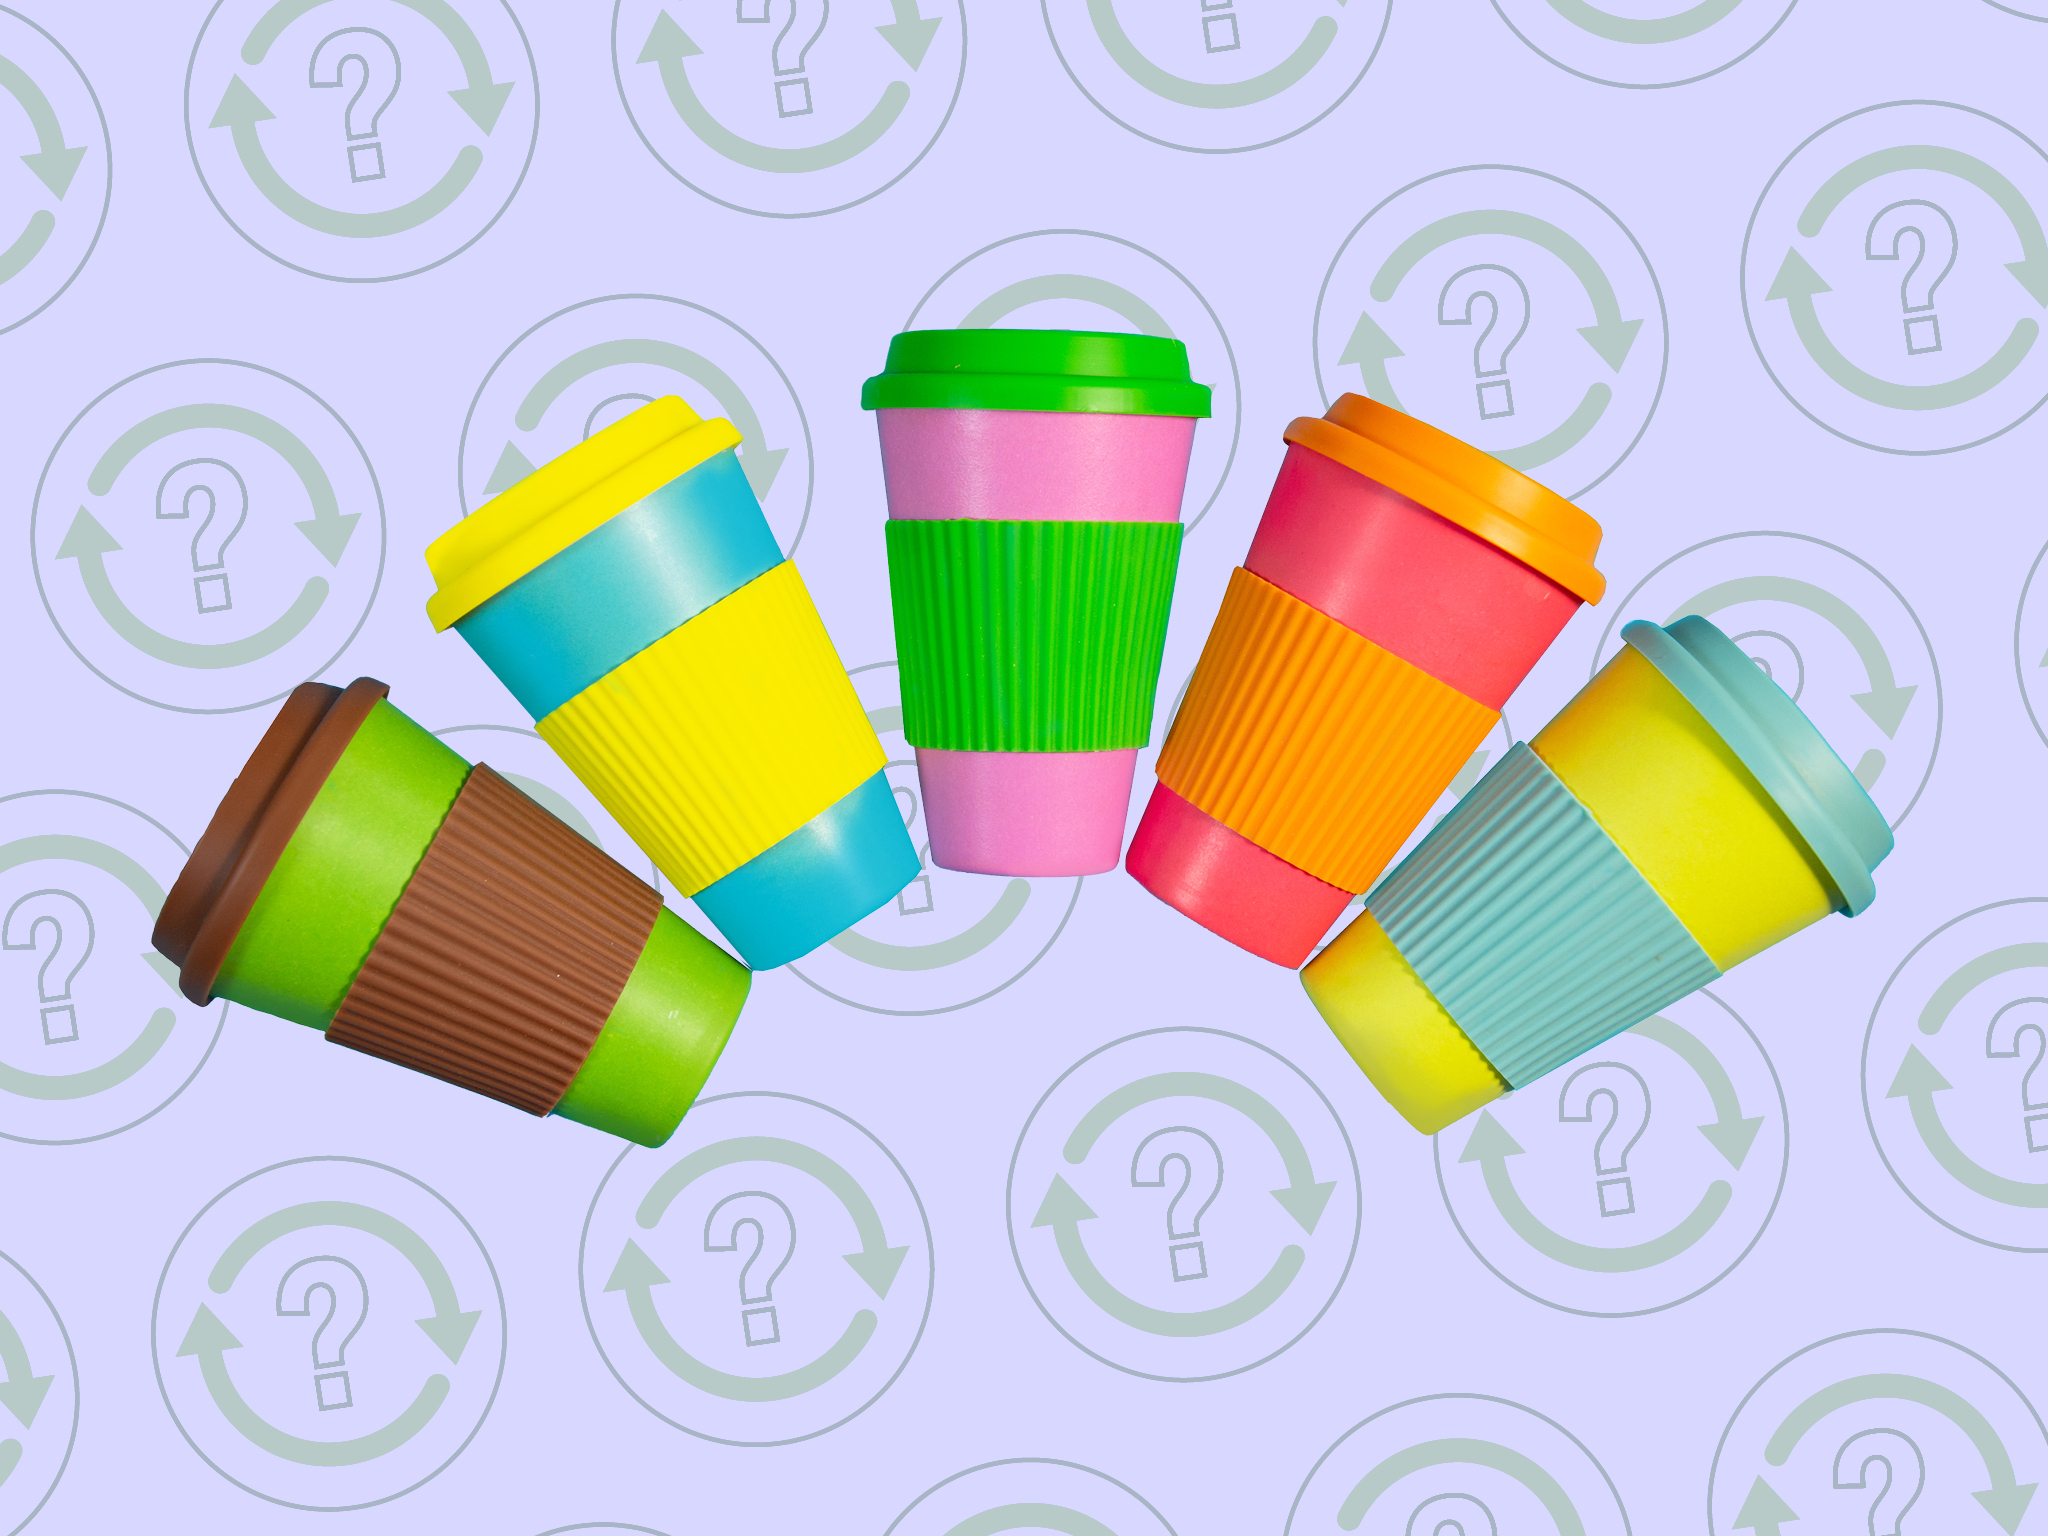 Six benefits of using reusable coffee cups – My Green Stuff